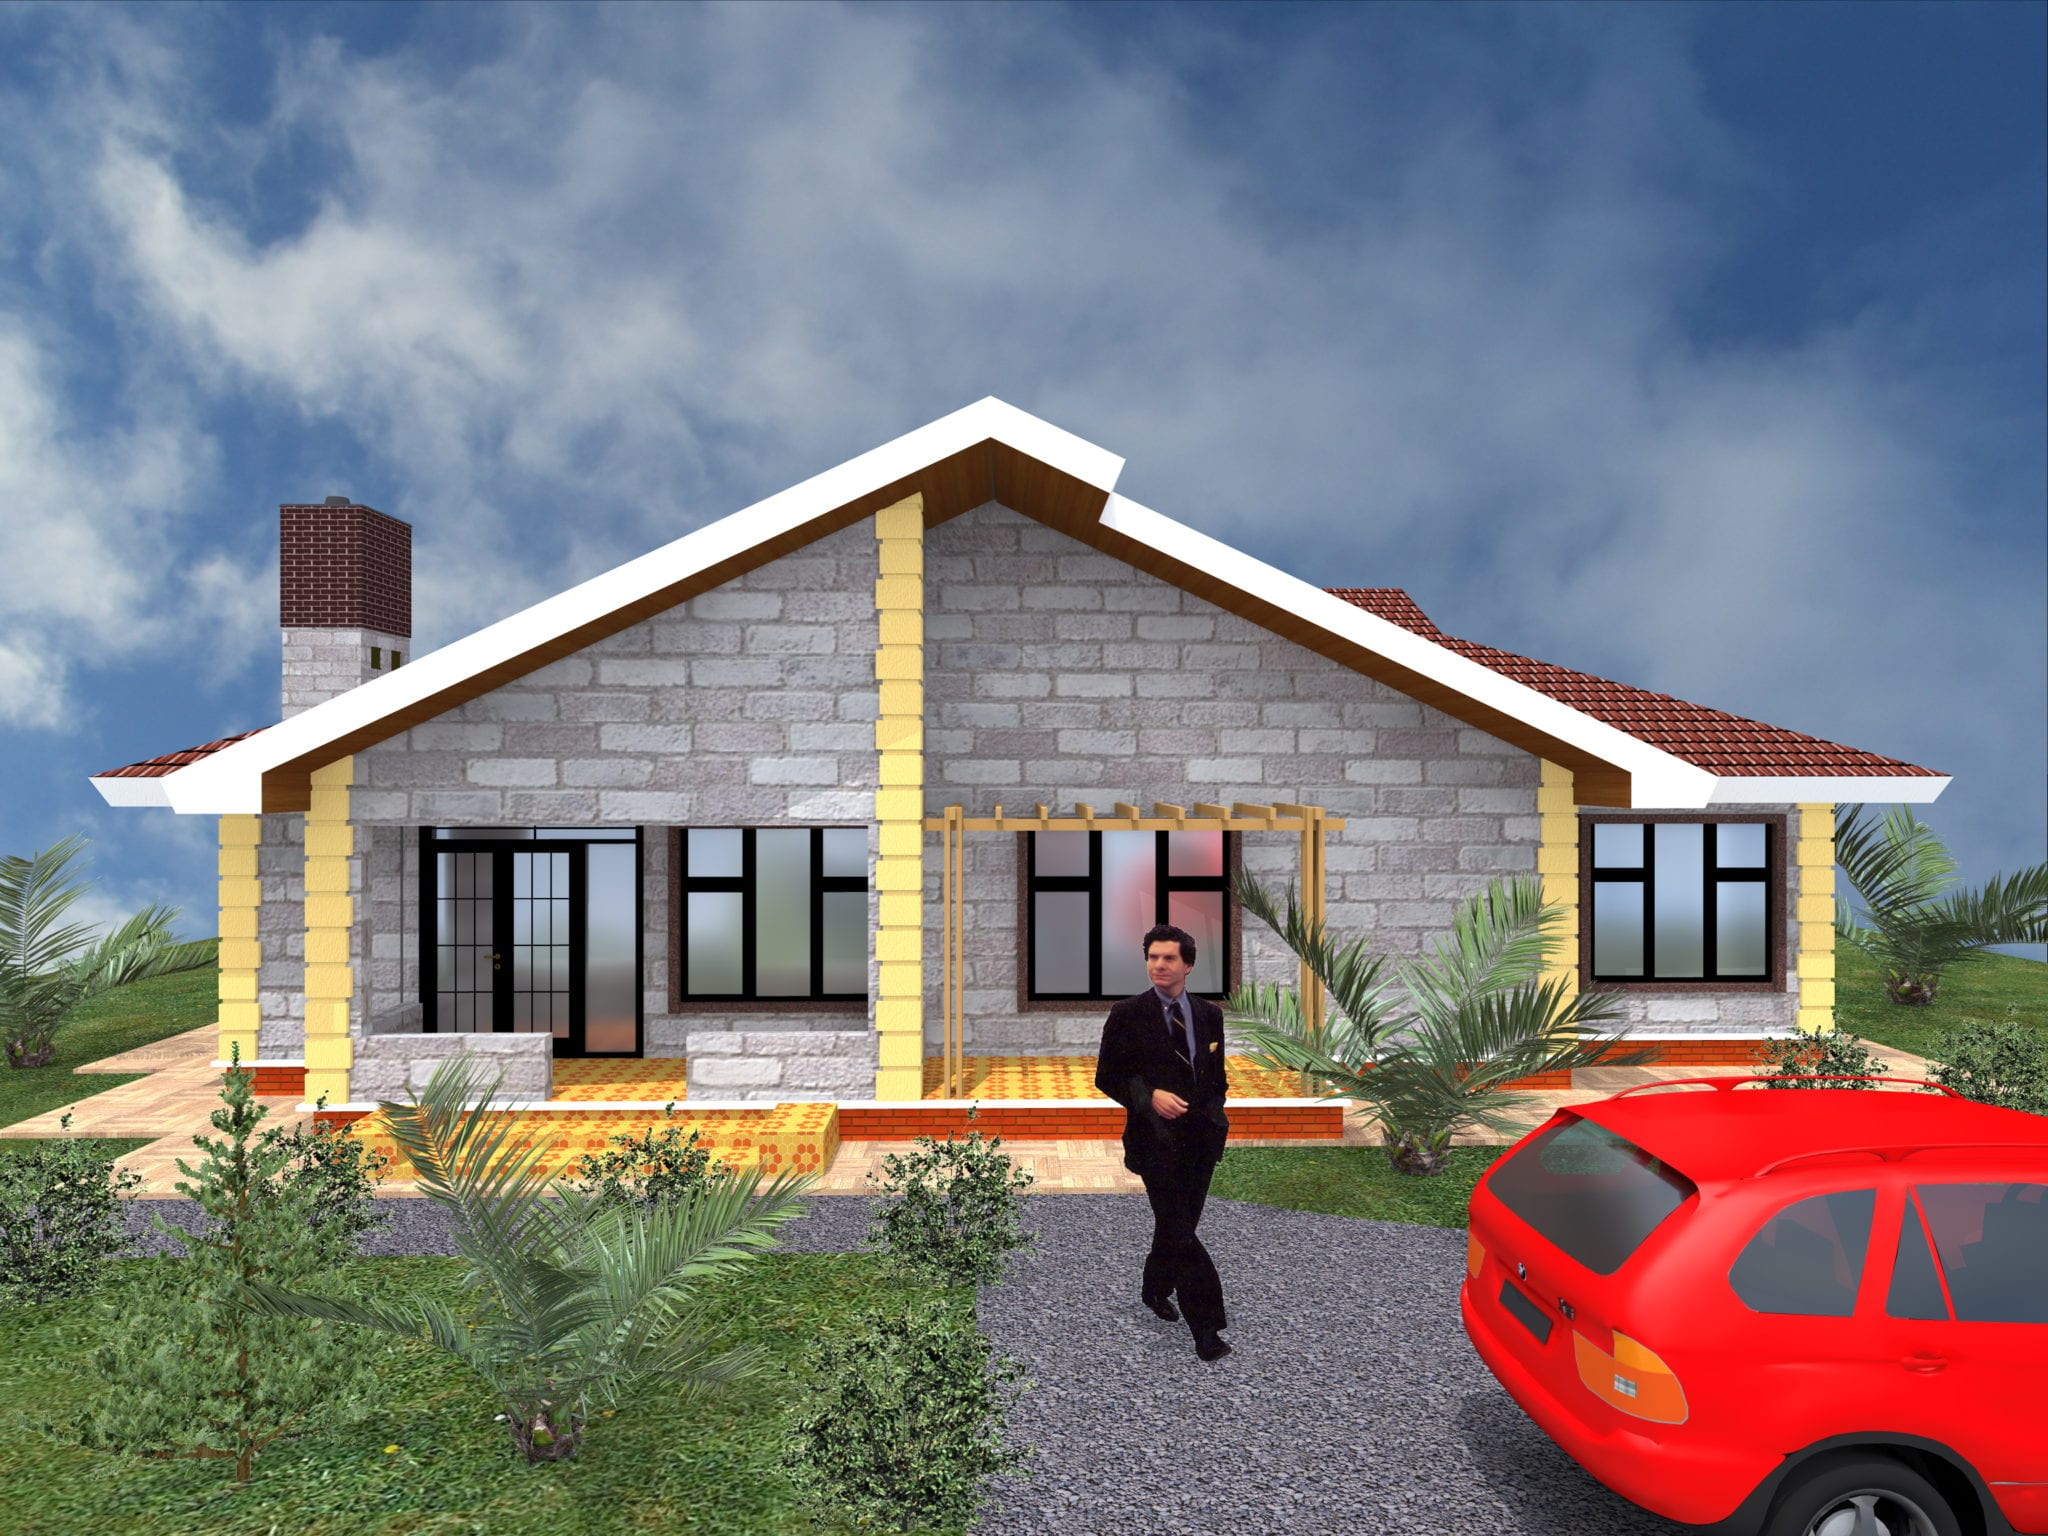 5 Bedroom Bungalow House Plans In Kenya Hpd Consult